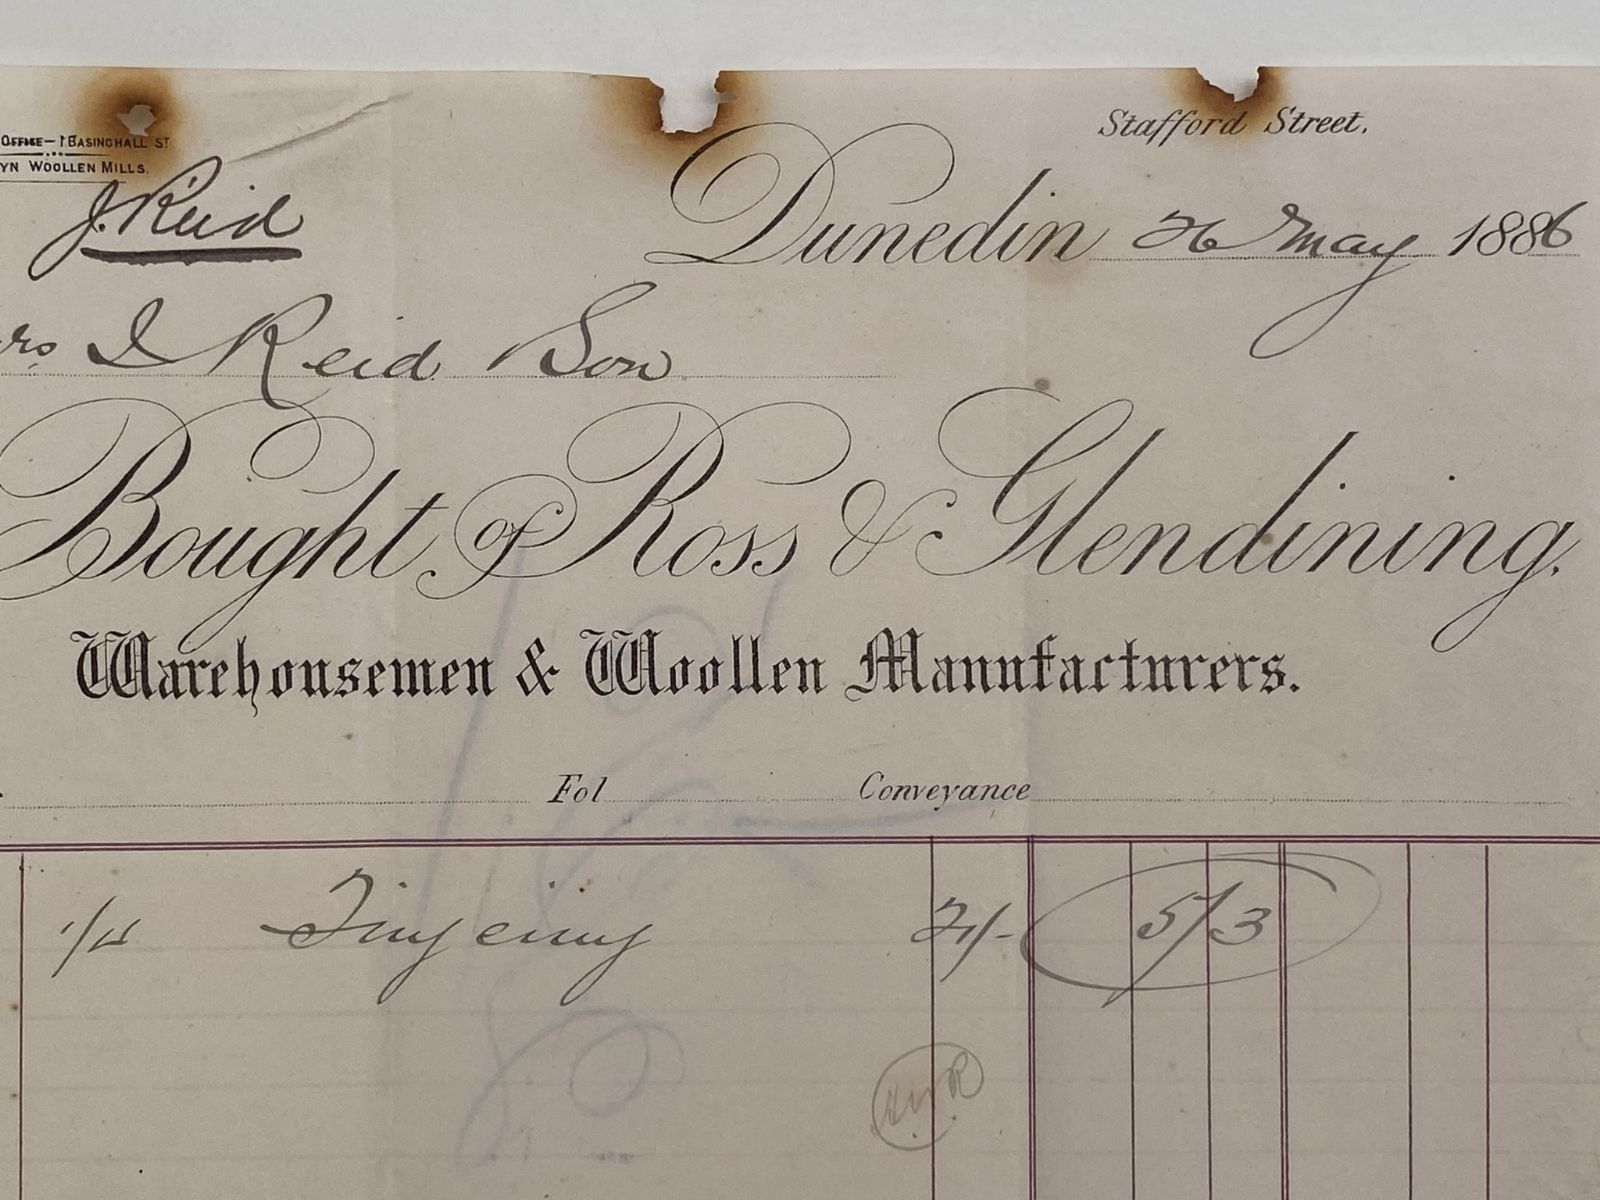 OLD INVOICE: Ross Glendining Ltd - Warehousmen & Woolens. Dunedin 1886 (136 yo)